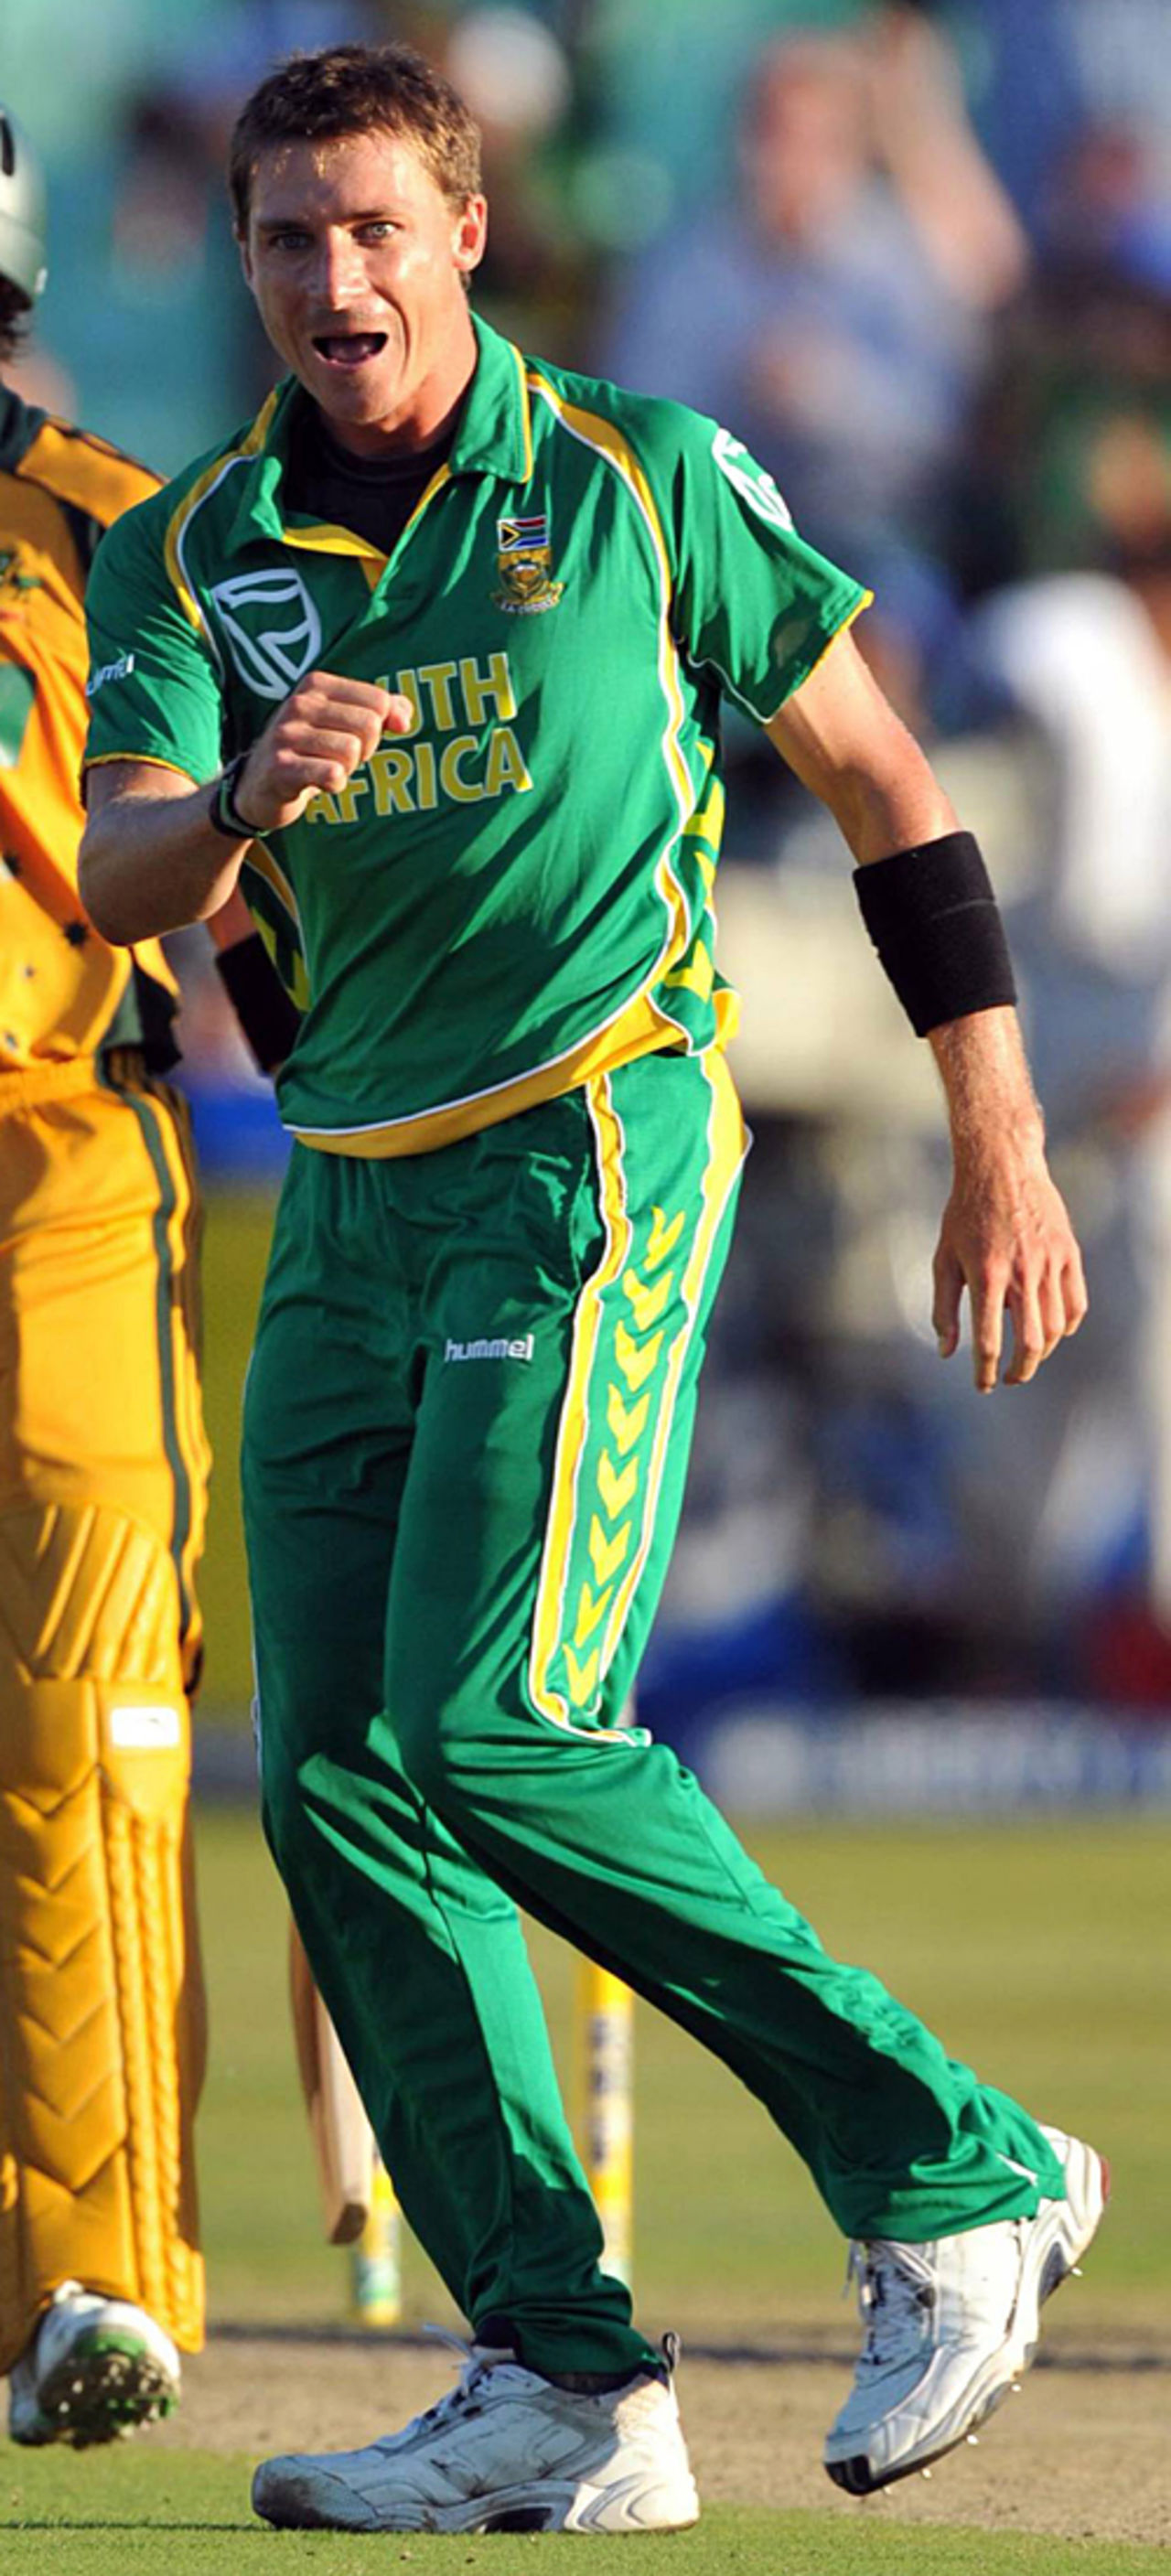 Dale Steyn celebrates the wicket of Callum Ferguson, South Africa v Australia, 1st ODI, Durban, April 3, 2009